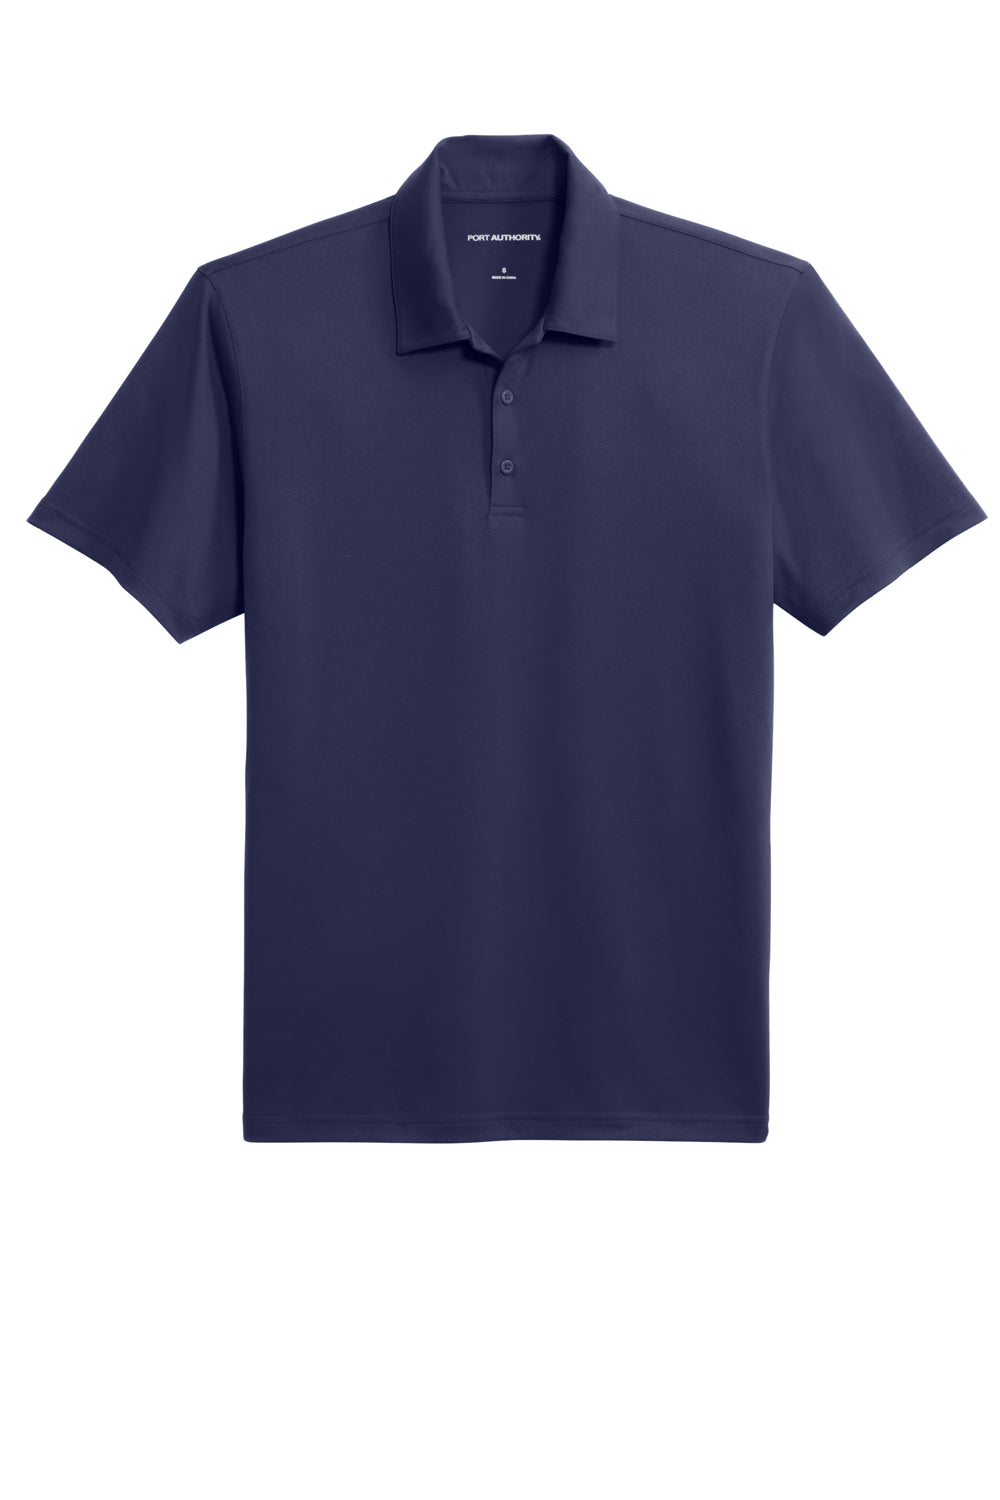 Port Authority K398 Staff Performance Short Sleeve Polo Shirt True Navy Blue Flat Front